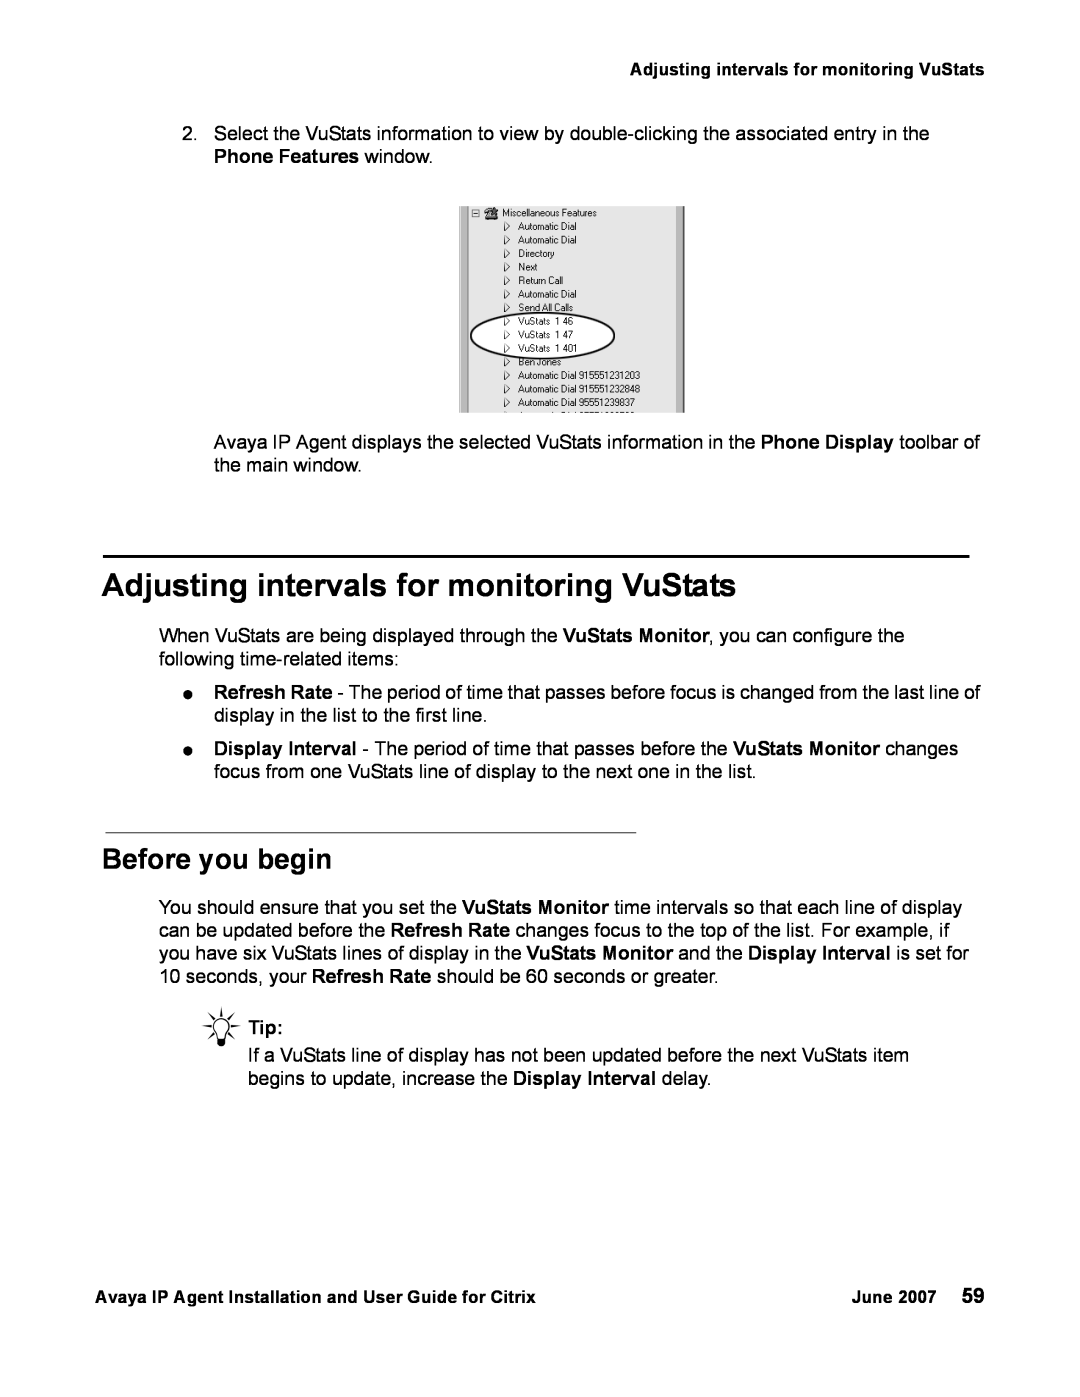 Avaya 7 manual Adjusting intervals for monitoring VuStats, Before you begin 